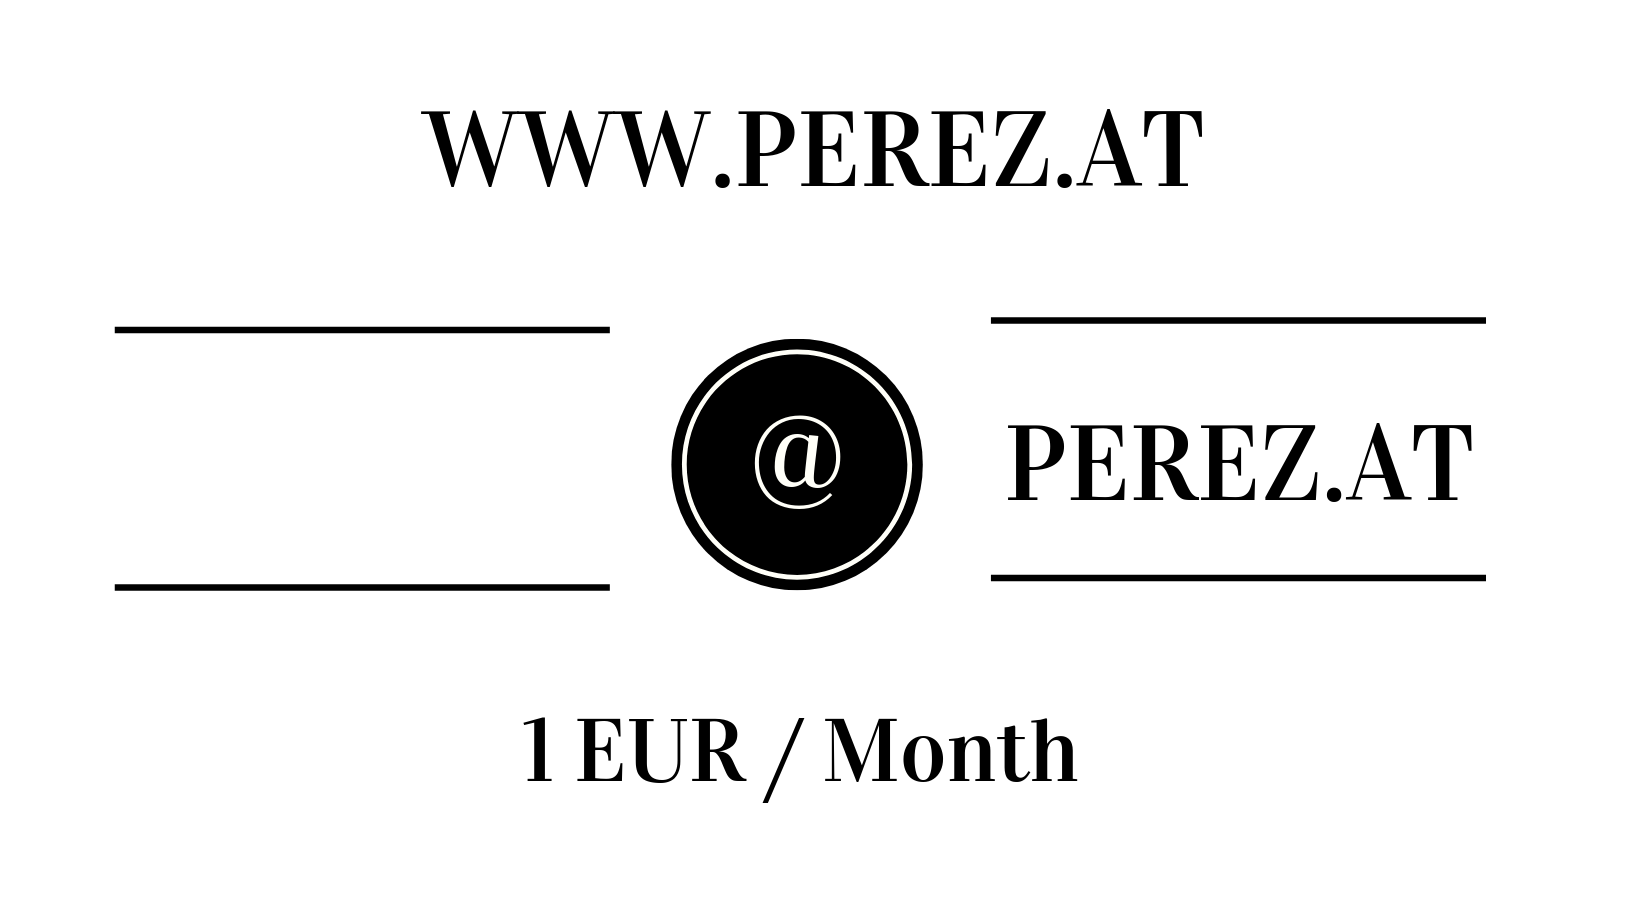 www.perez.at